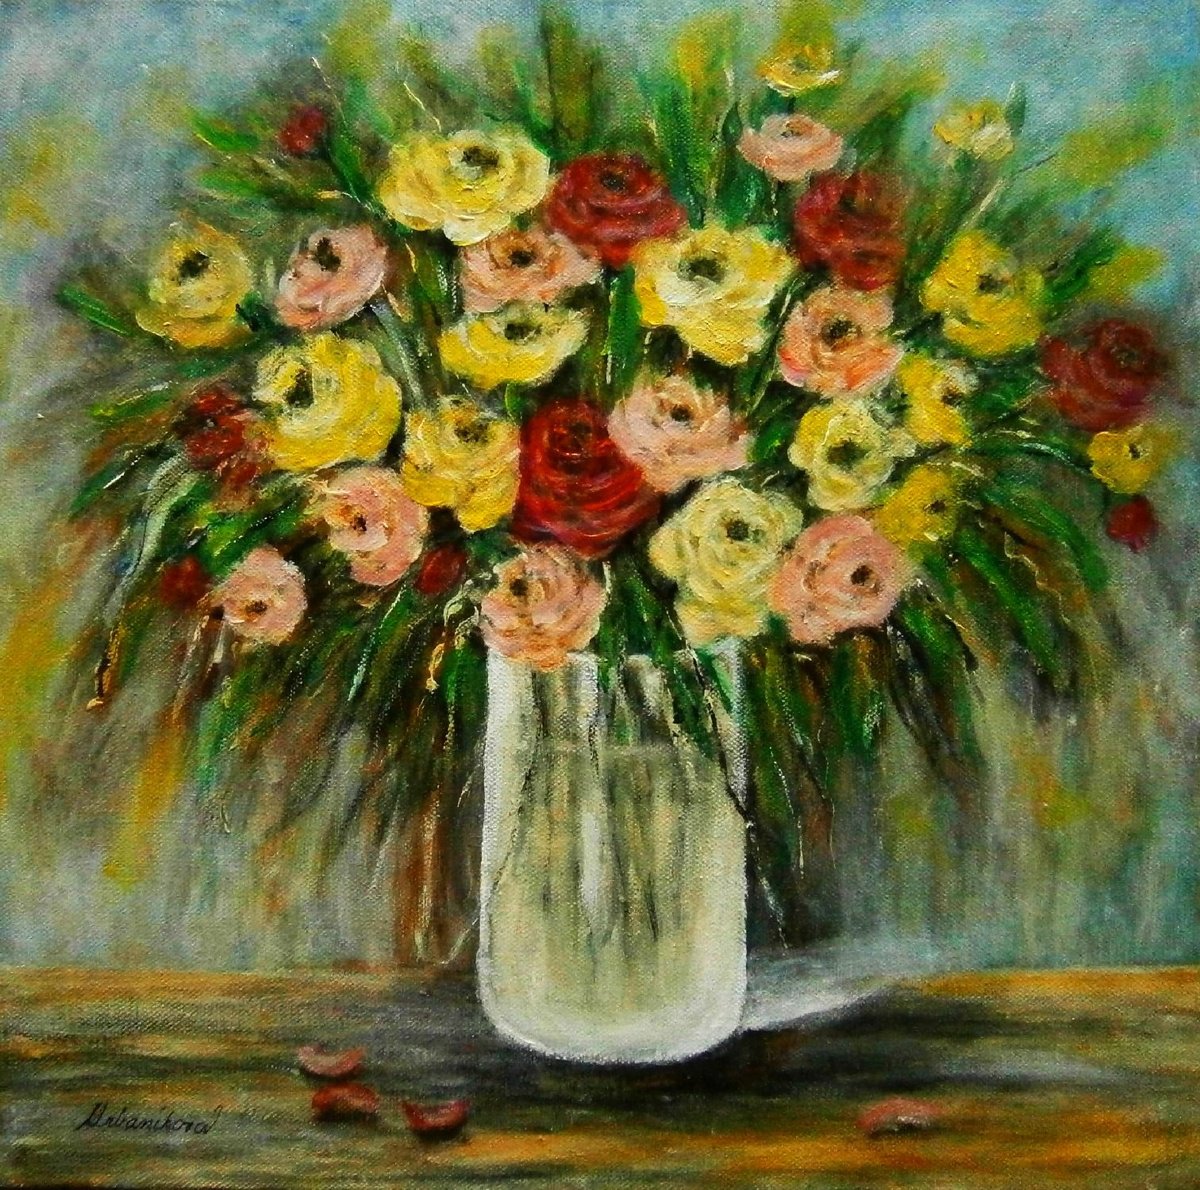 Bouquet of roses - still life.. by Em�lia Urban�kov�